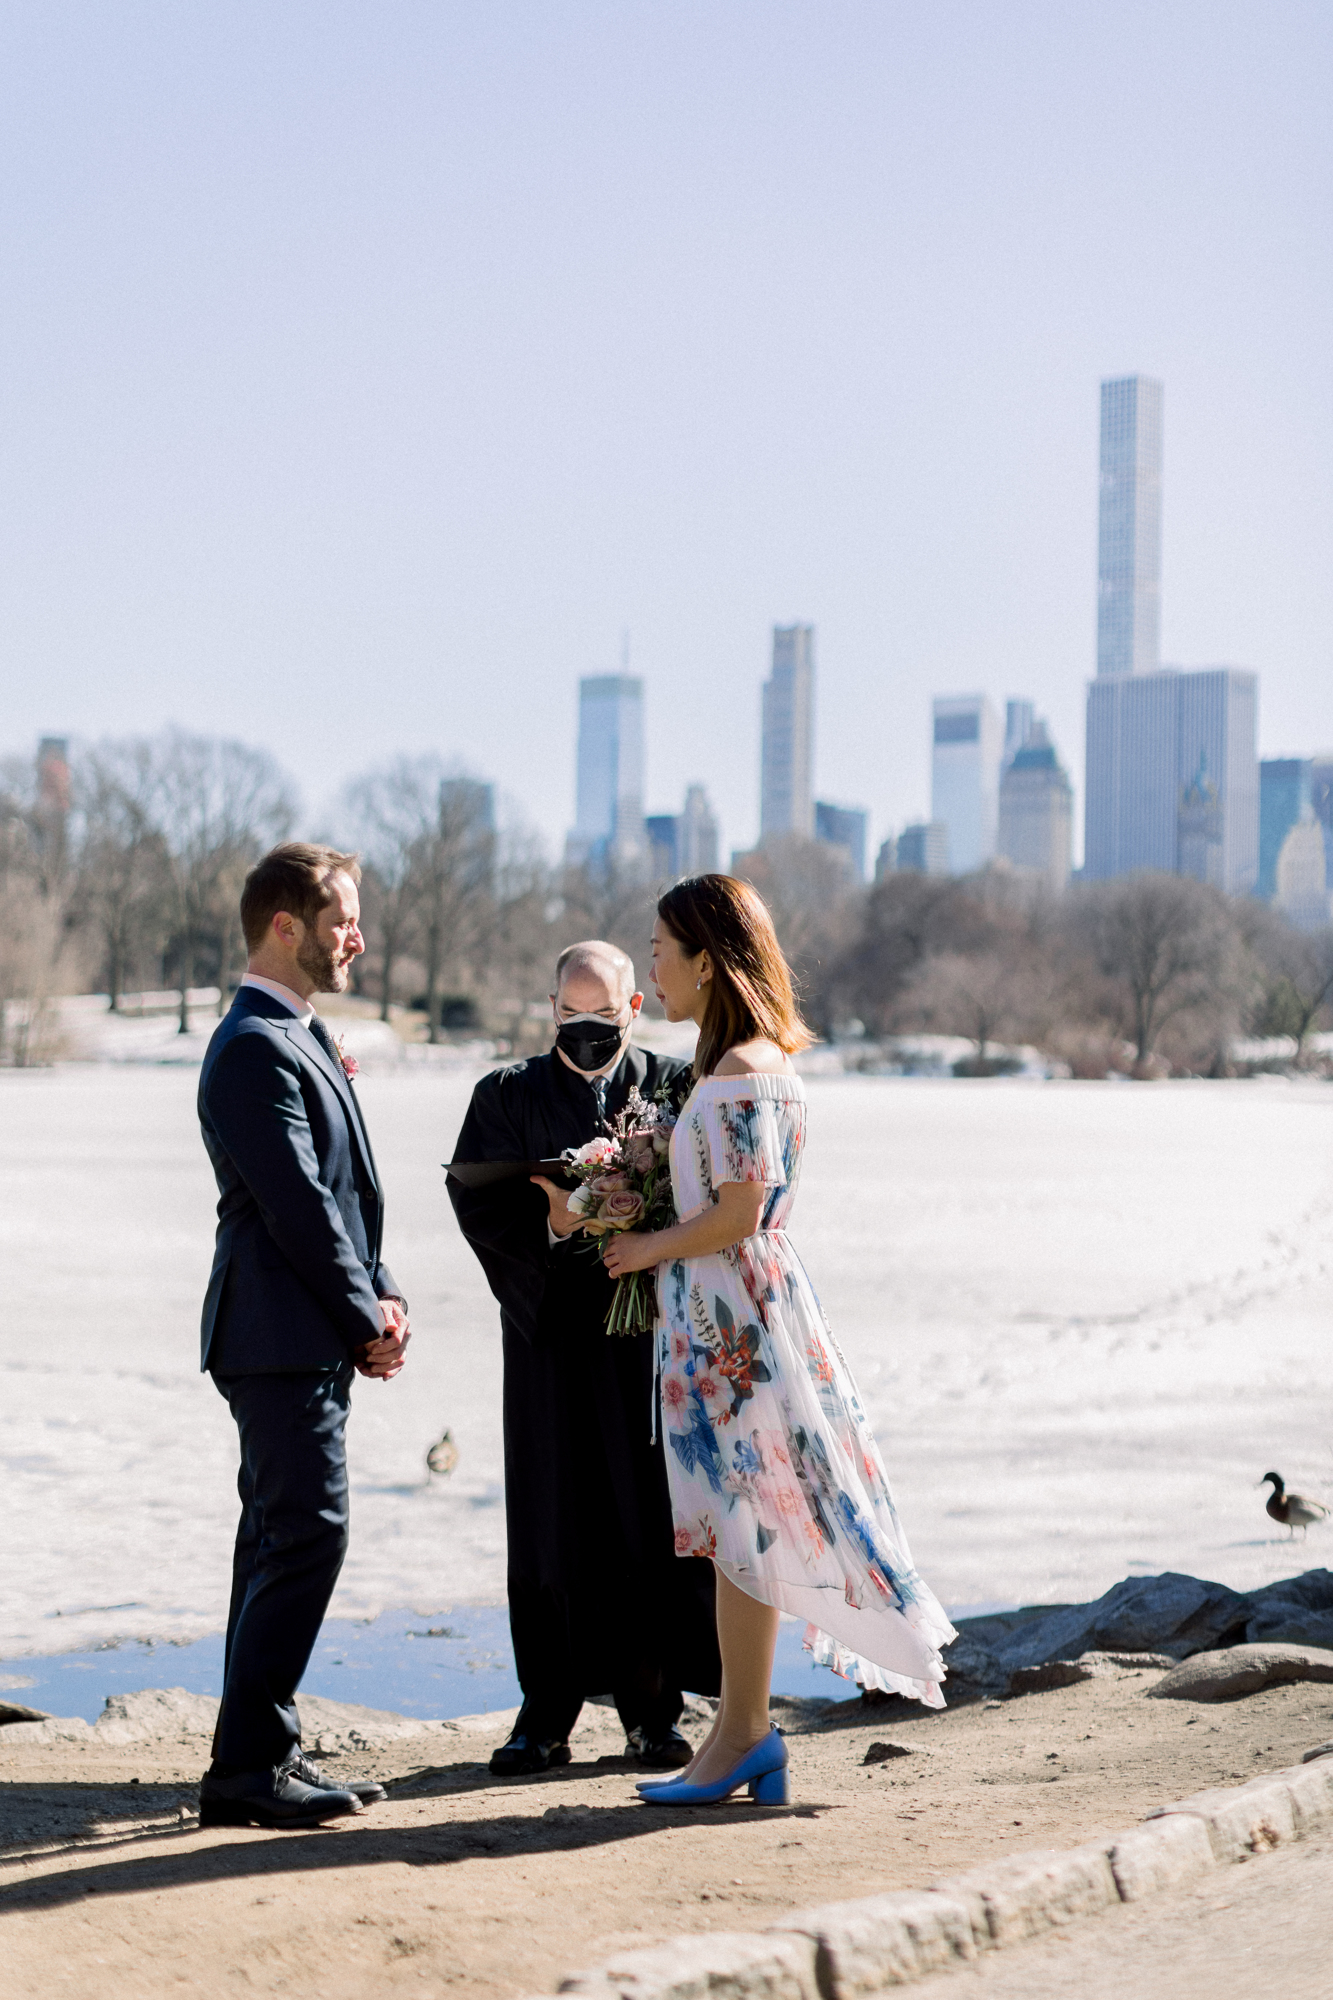 Pretty Central Park elopement locations